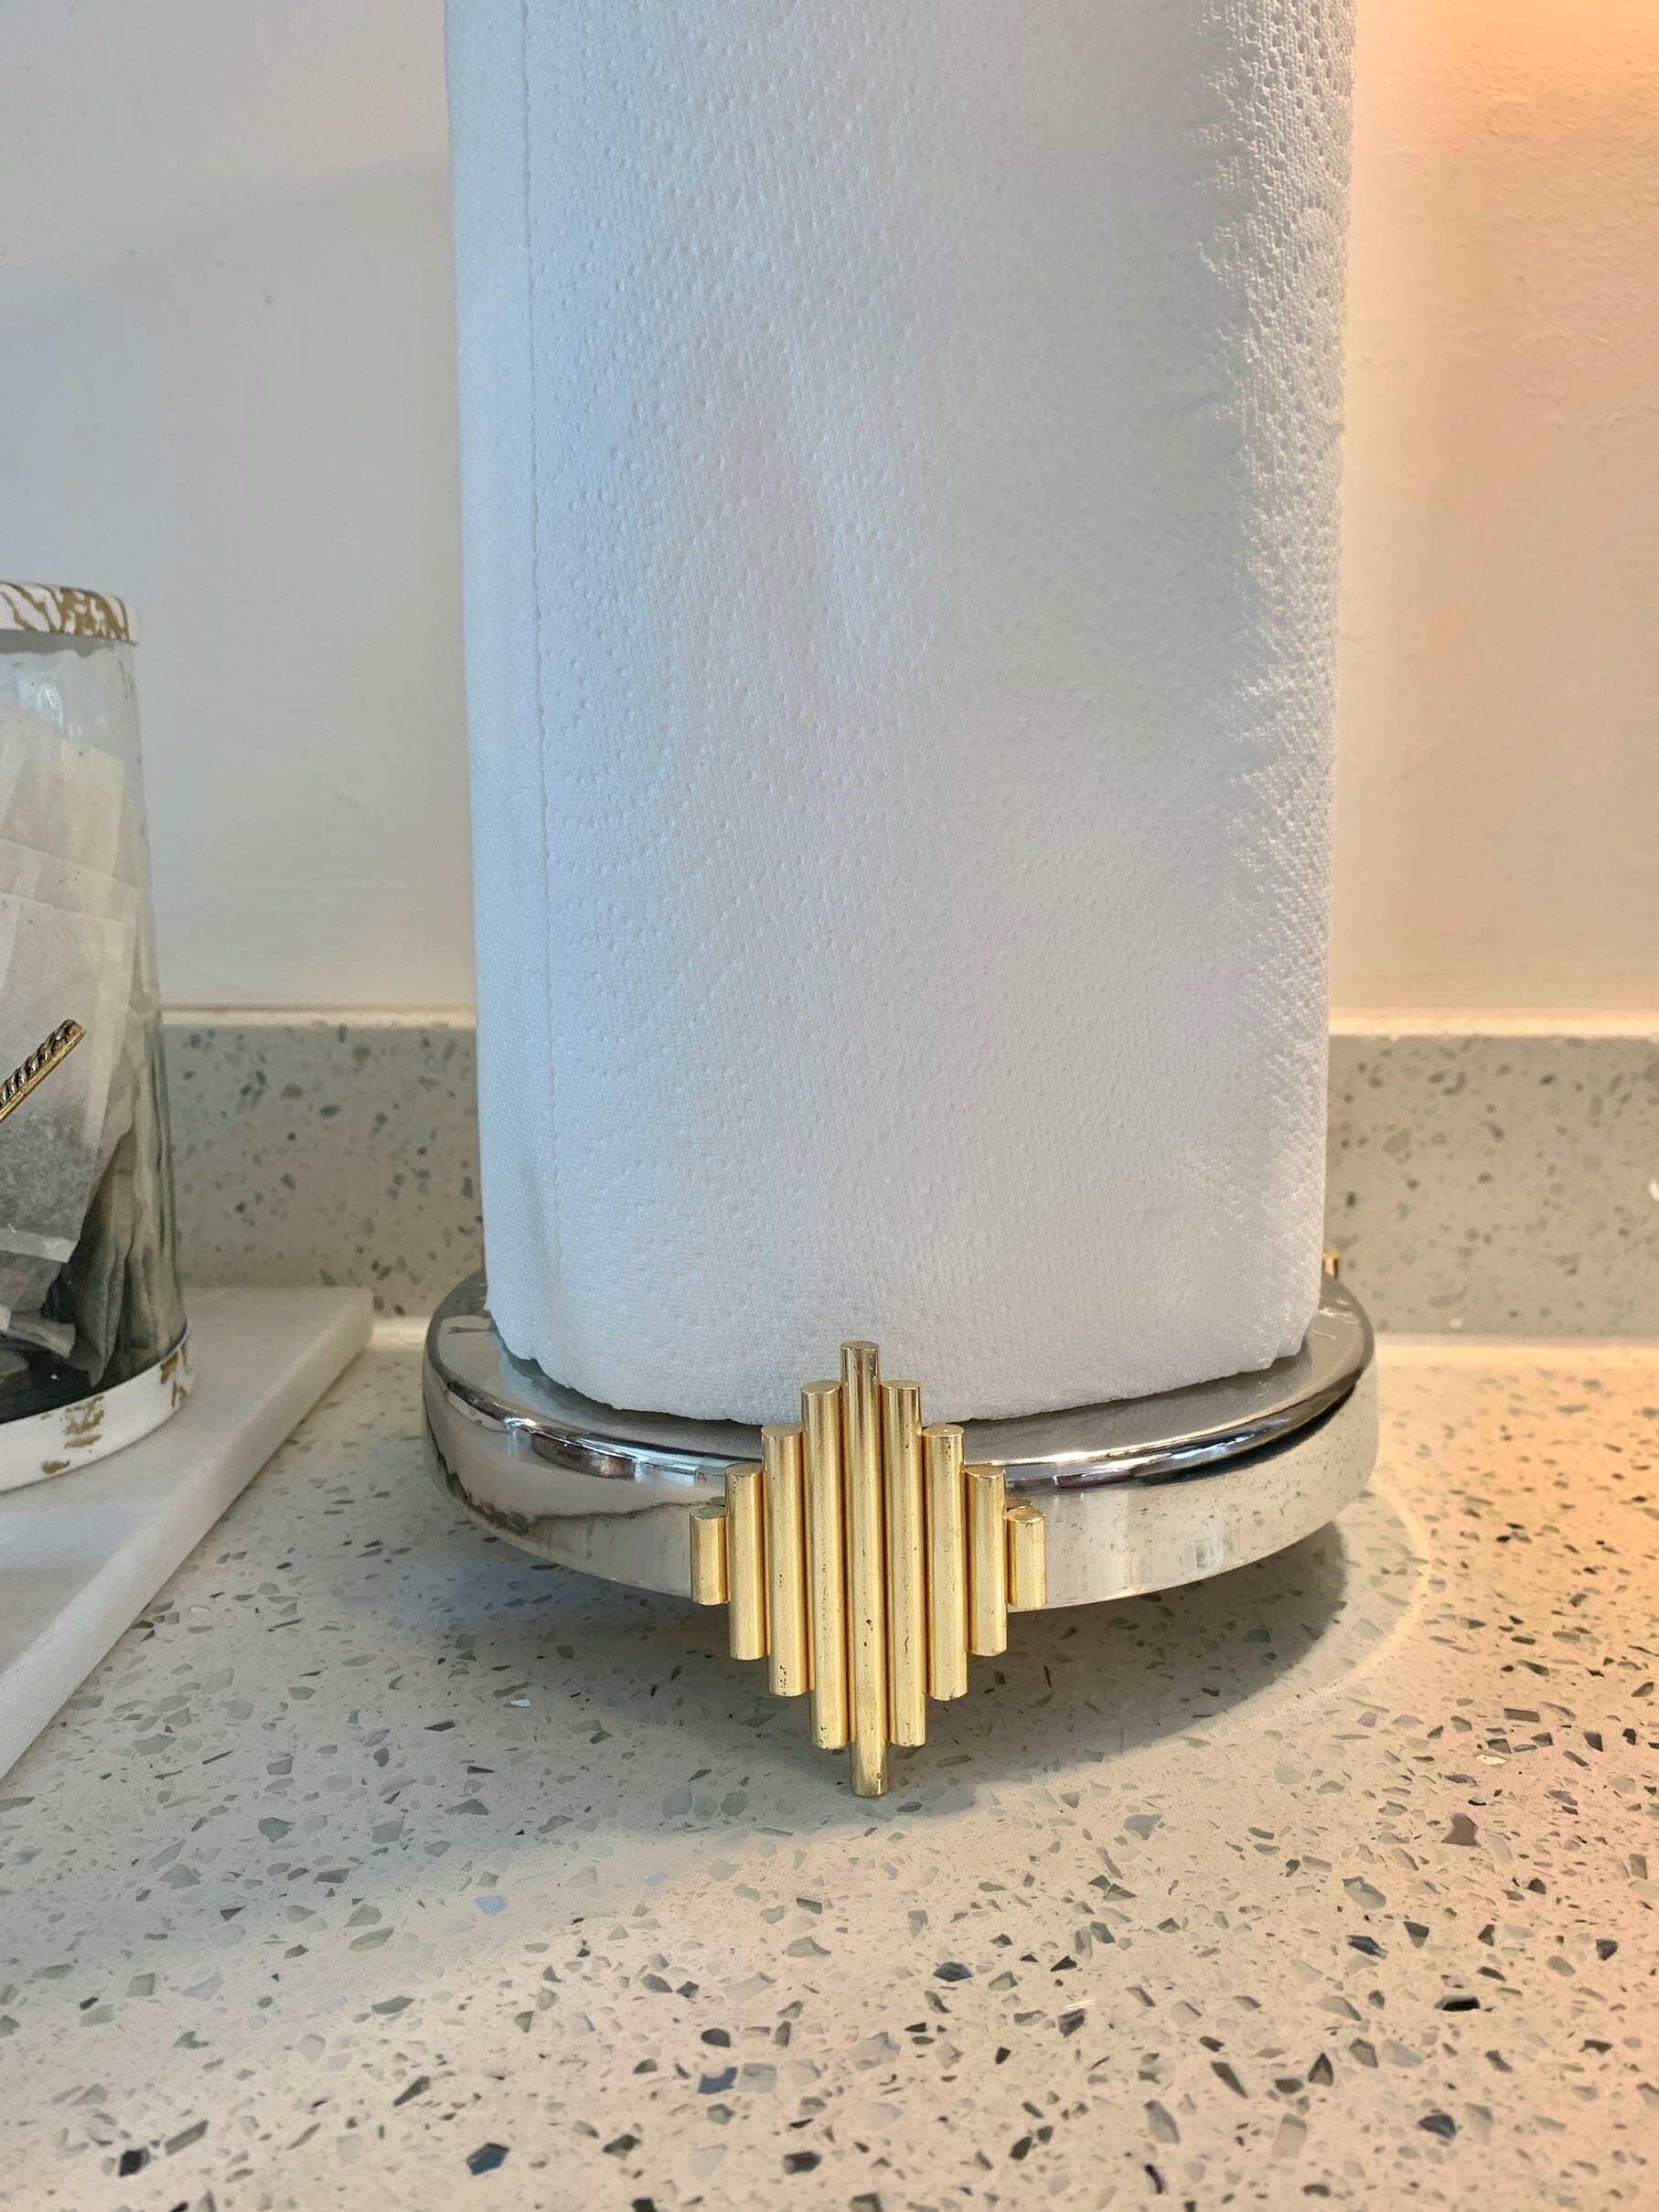 Kitchen Towel Dispenser with Gold Symmetrical Design Kitchen roll holder High Class Touch - Home Decor 